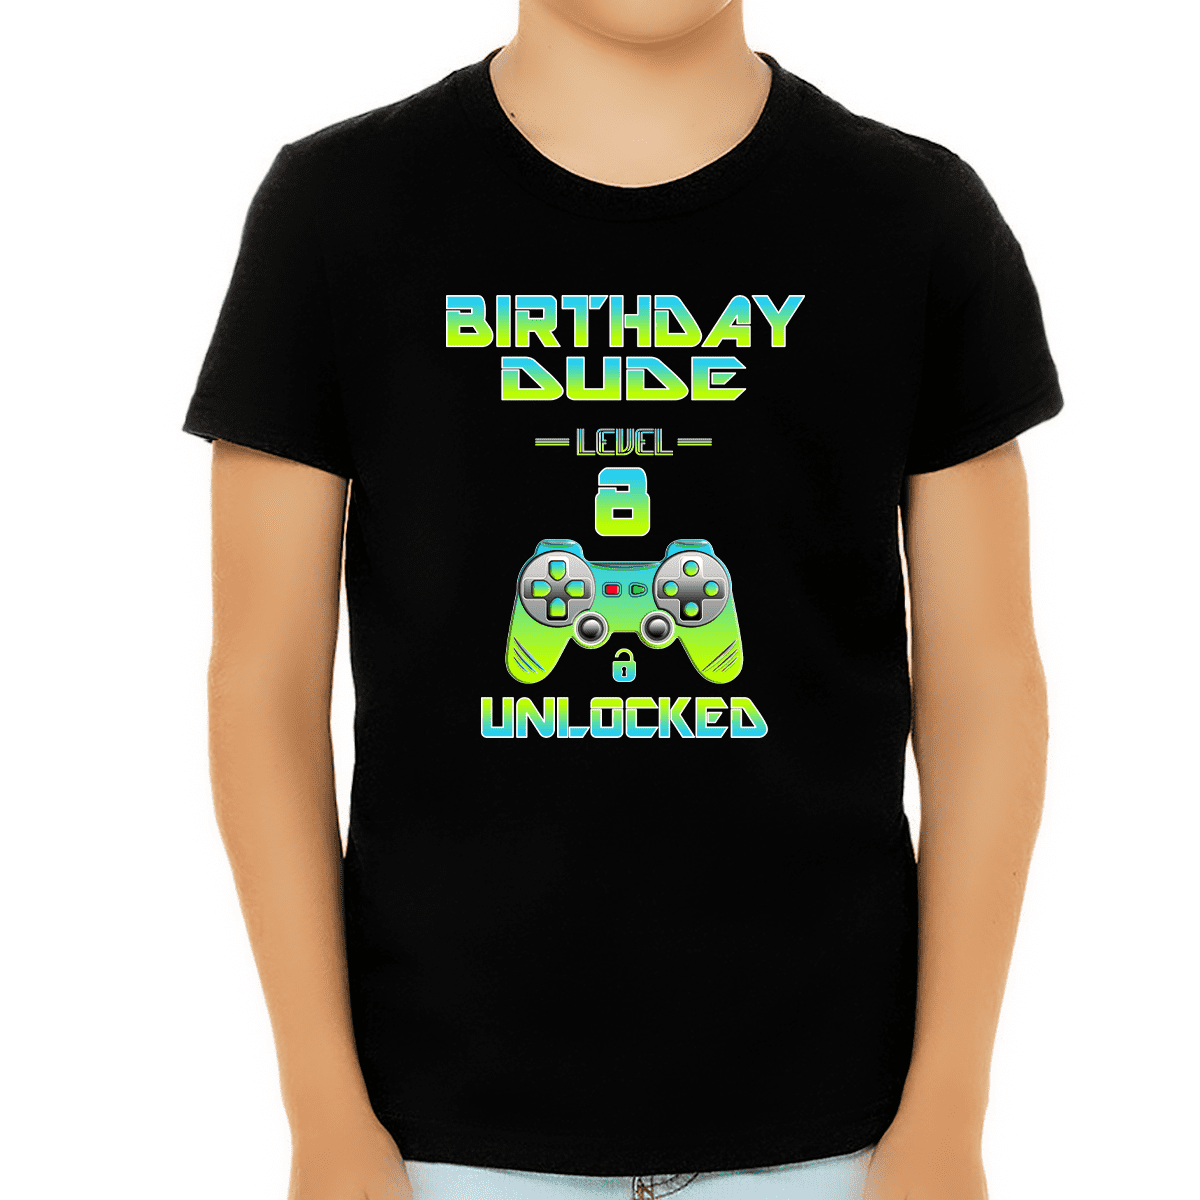 8th Birthday Boy Gamer Shirt Eighth Birthday Boy Shirt Gaming Boy Shirt Birthday Boy Level 8 Unlocked Shirt Eighth Years Old Shirt